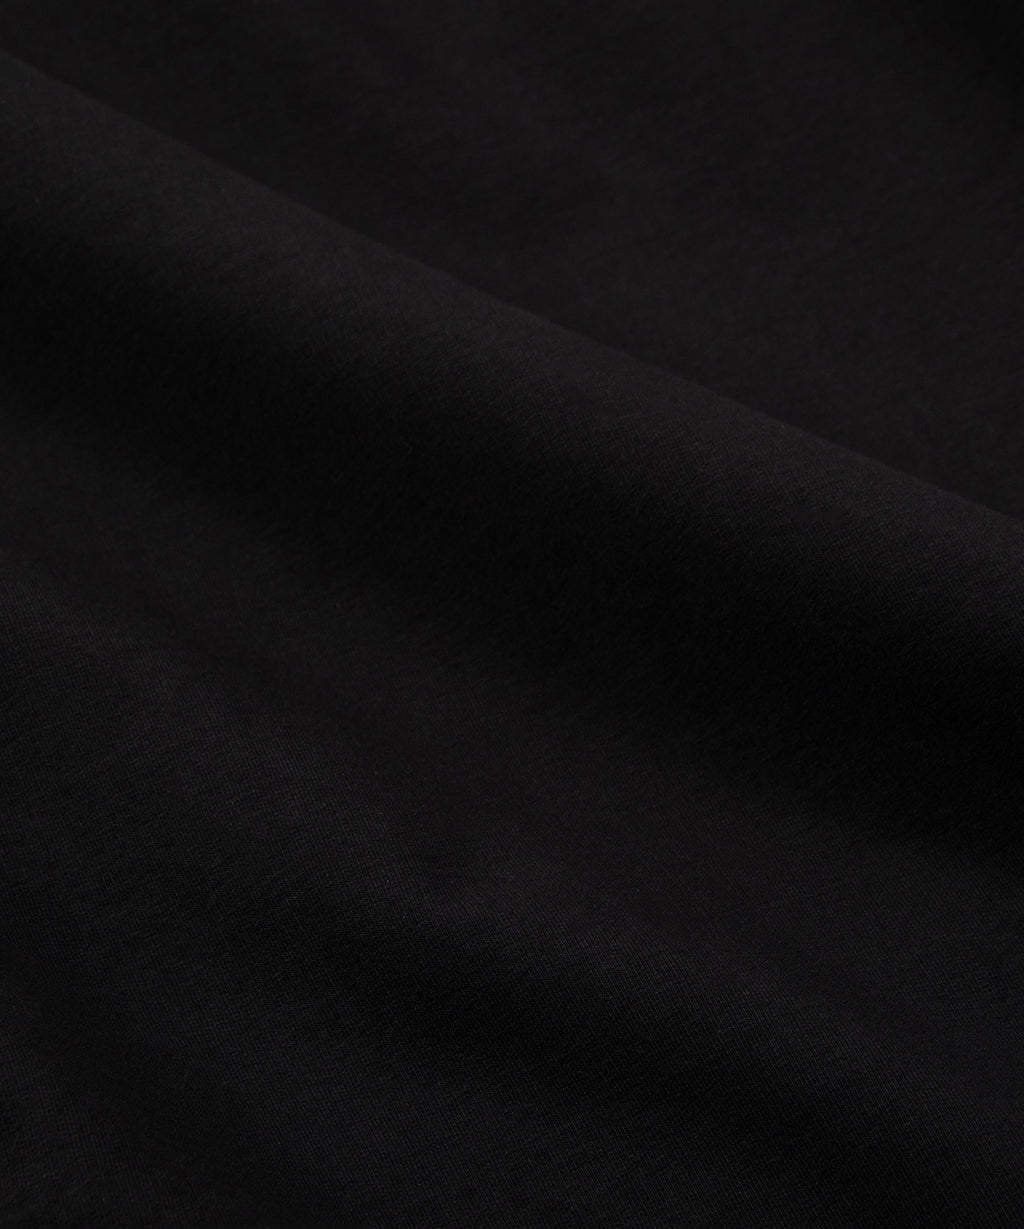  Fabric closeup on Paper Planes Stash Box Hoodie, color Black.